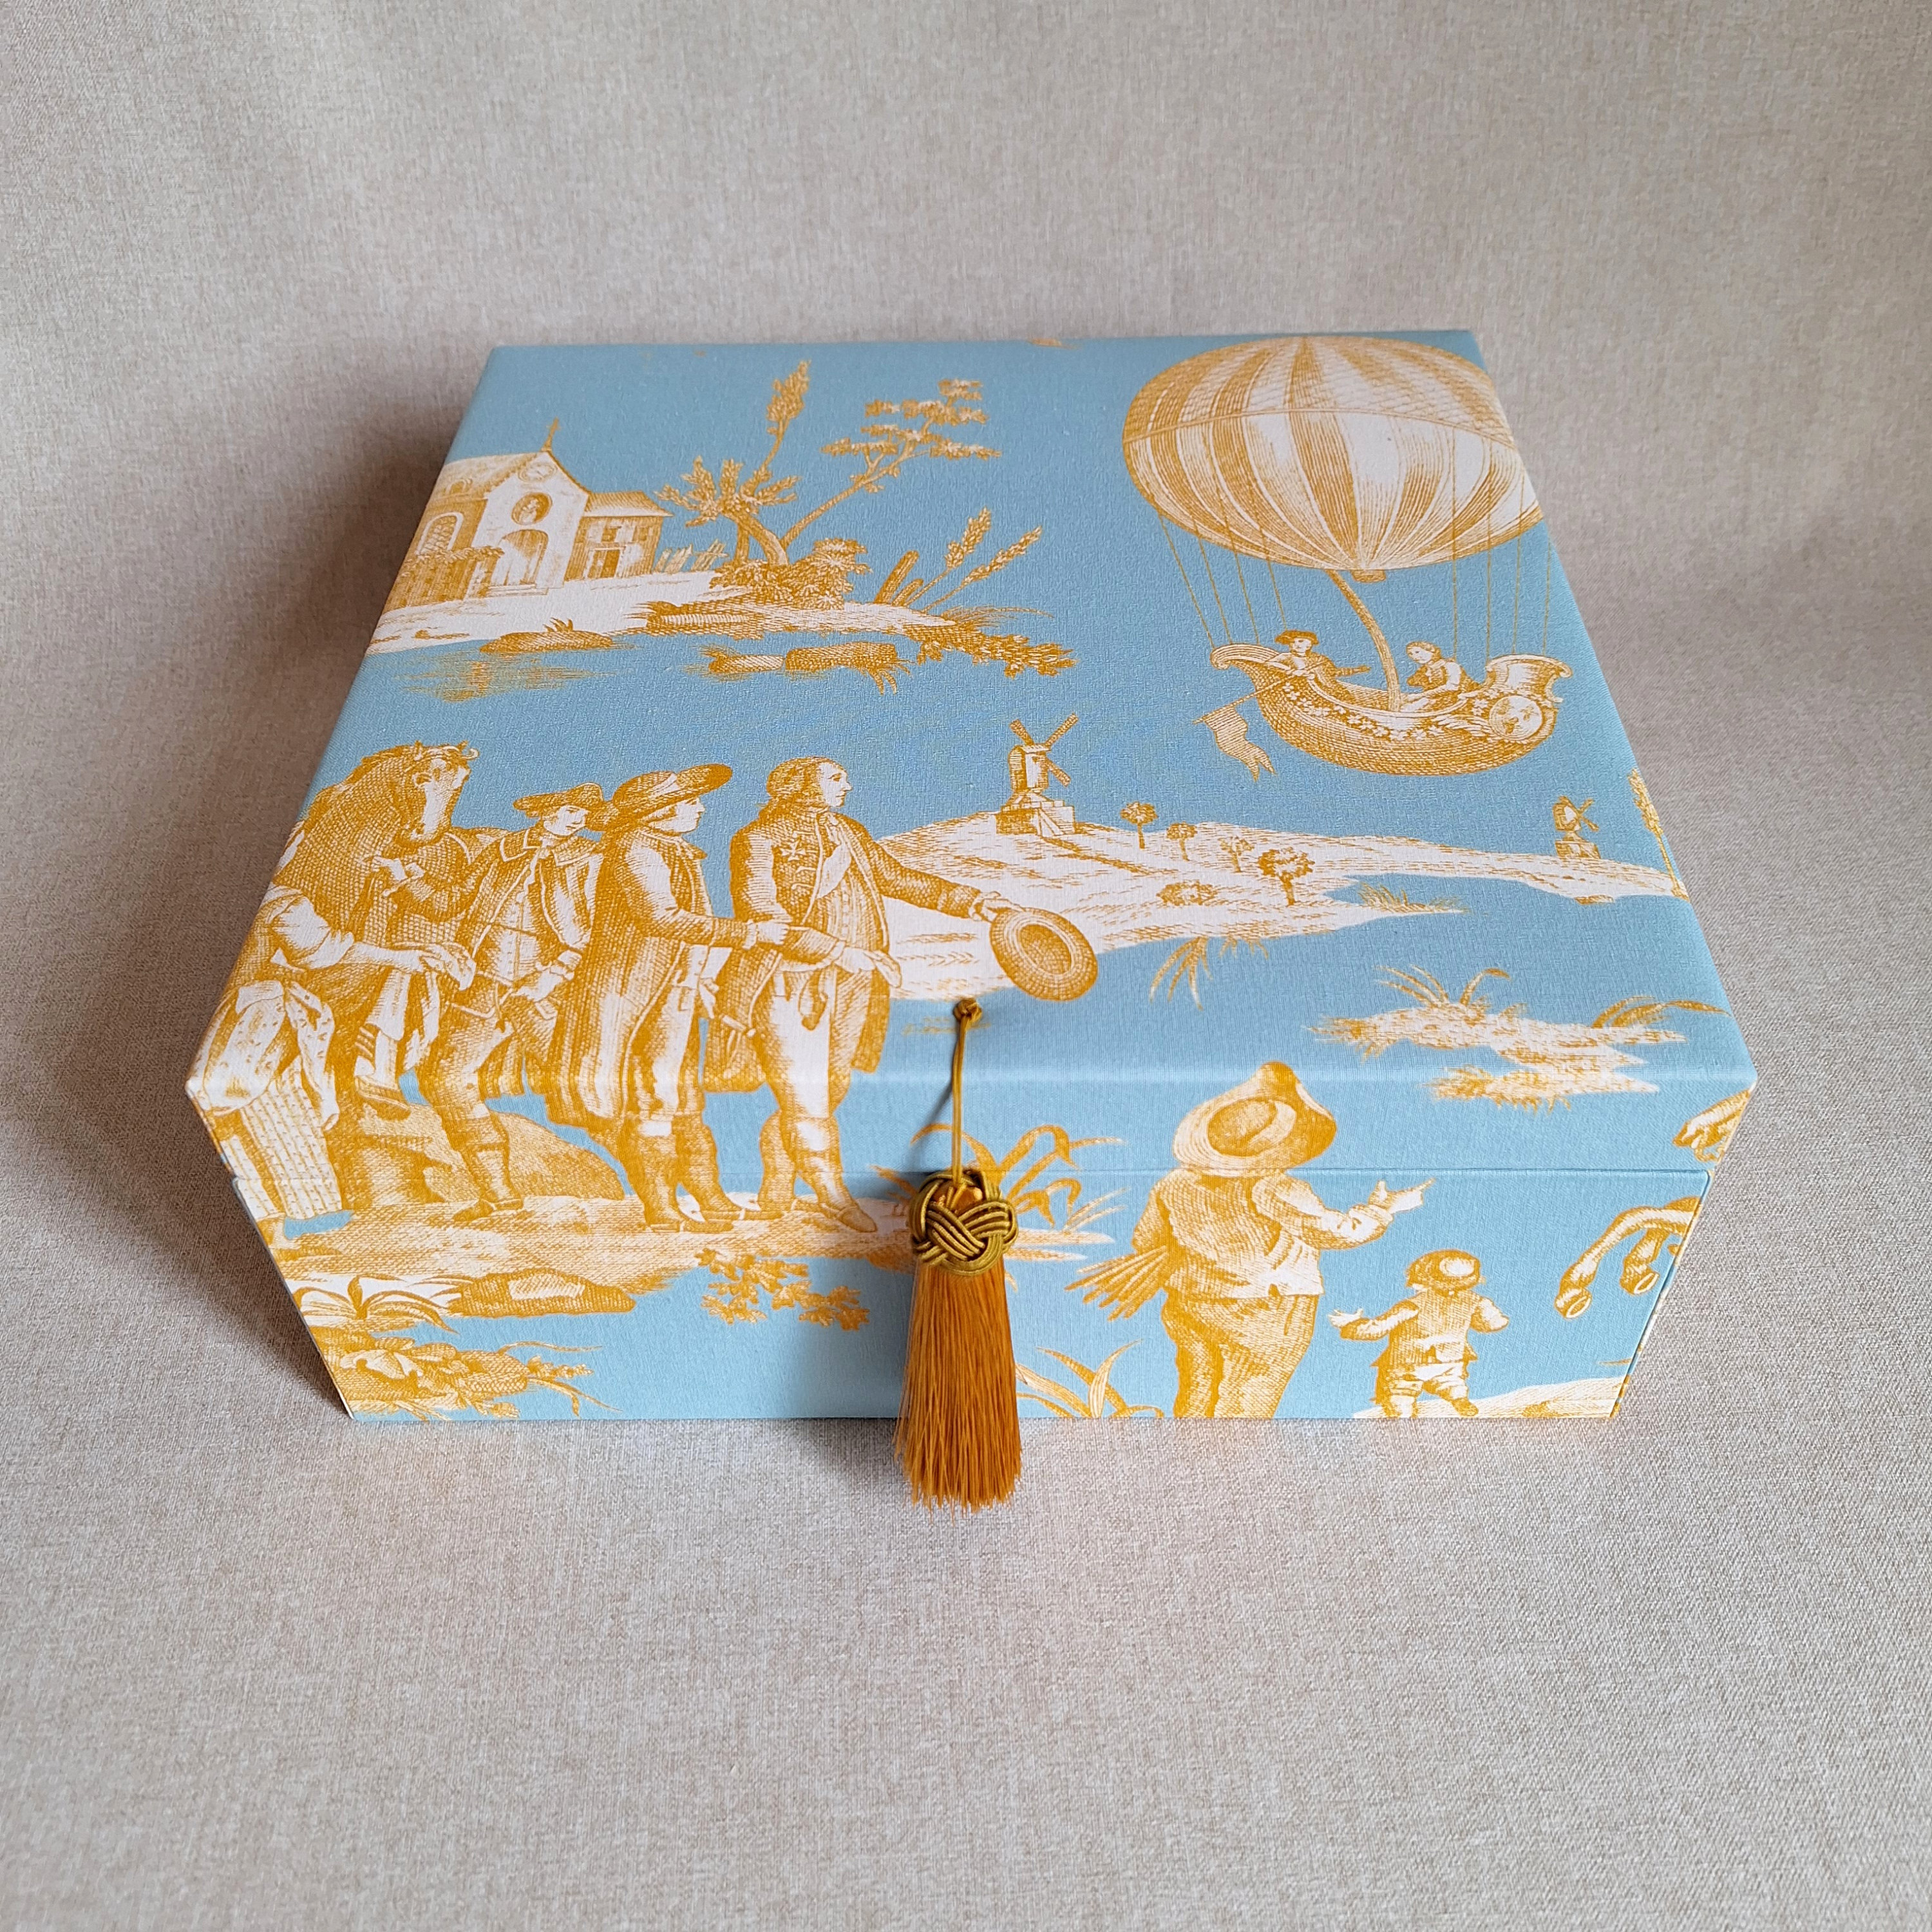 NUOBESTY 1pc caja corrugado scraf bufanda azul platos papel decorativo caja  regalo boda dama de honor maleta